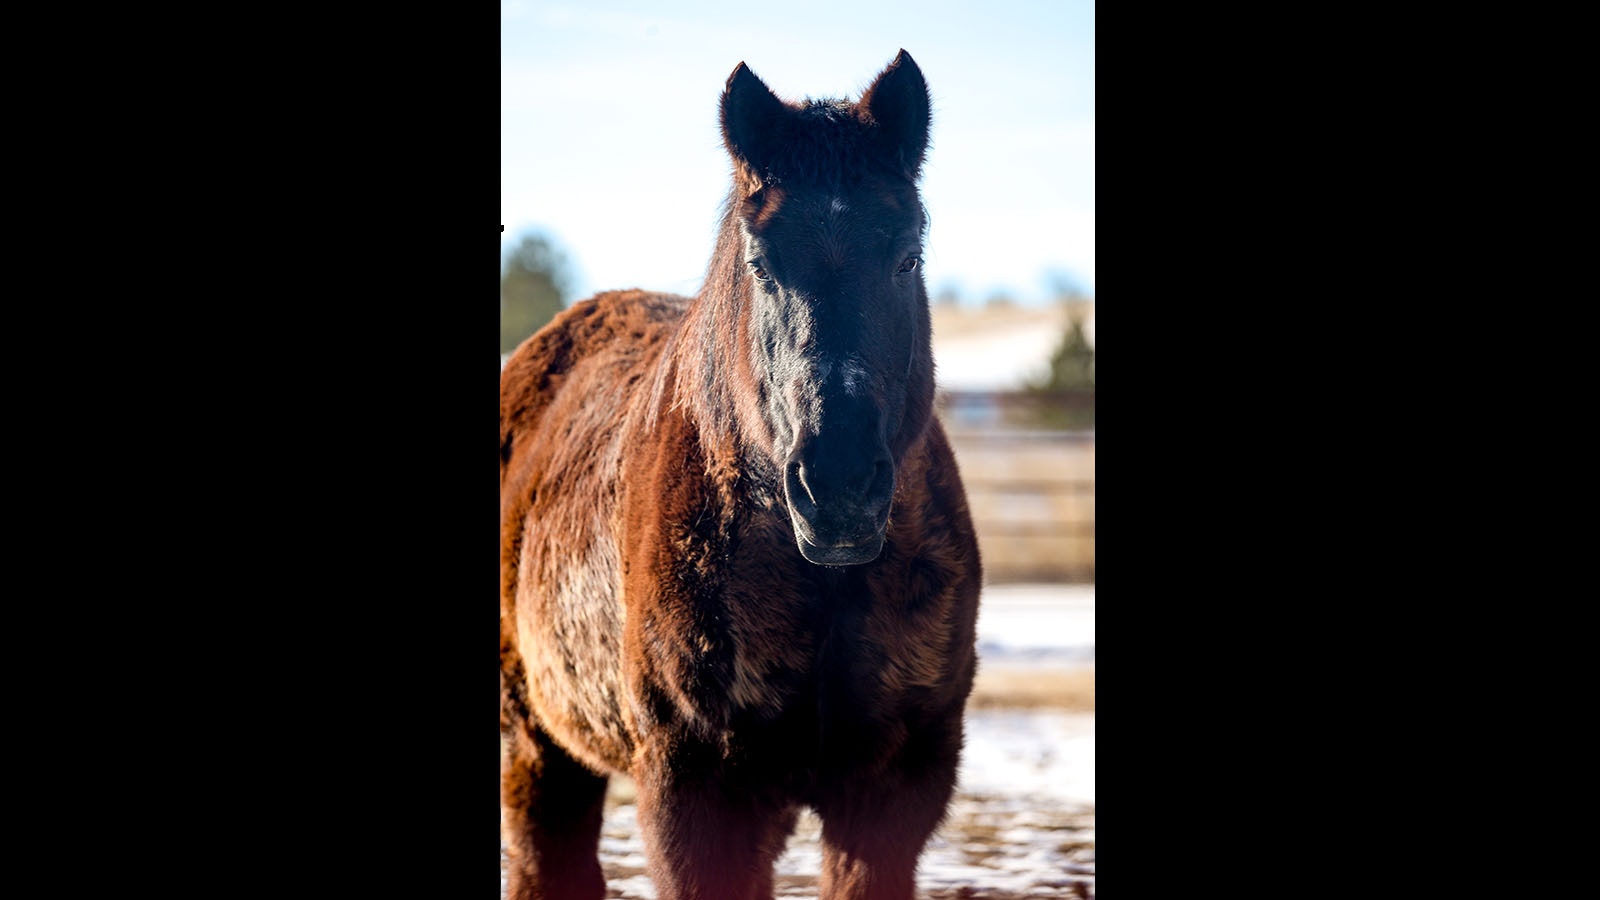 Clover is a draft horse up for adoption through the Broken Bandit Wildlife Center near Cheyenne.